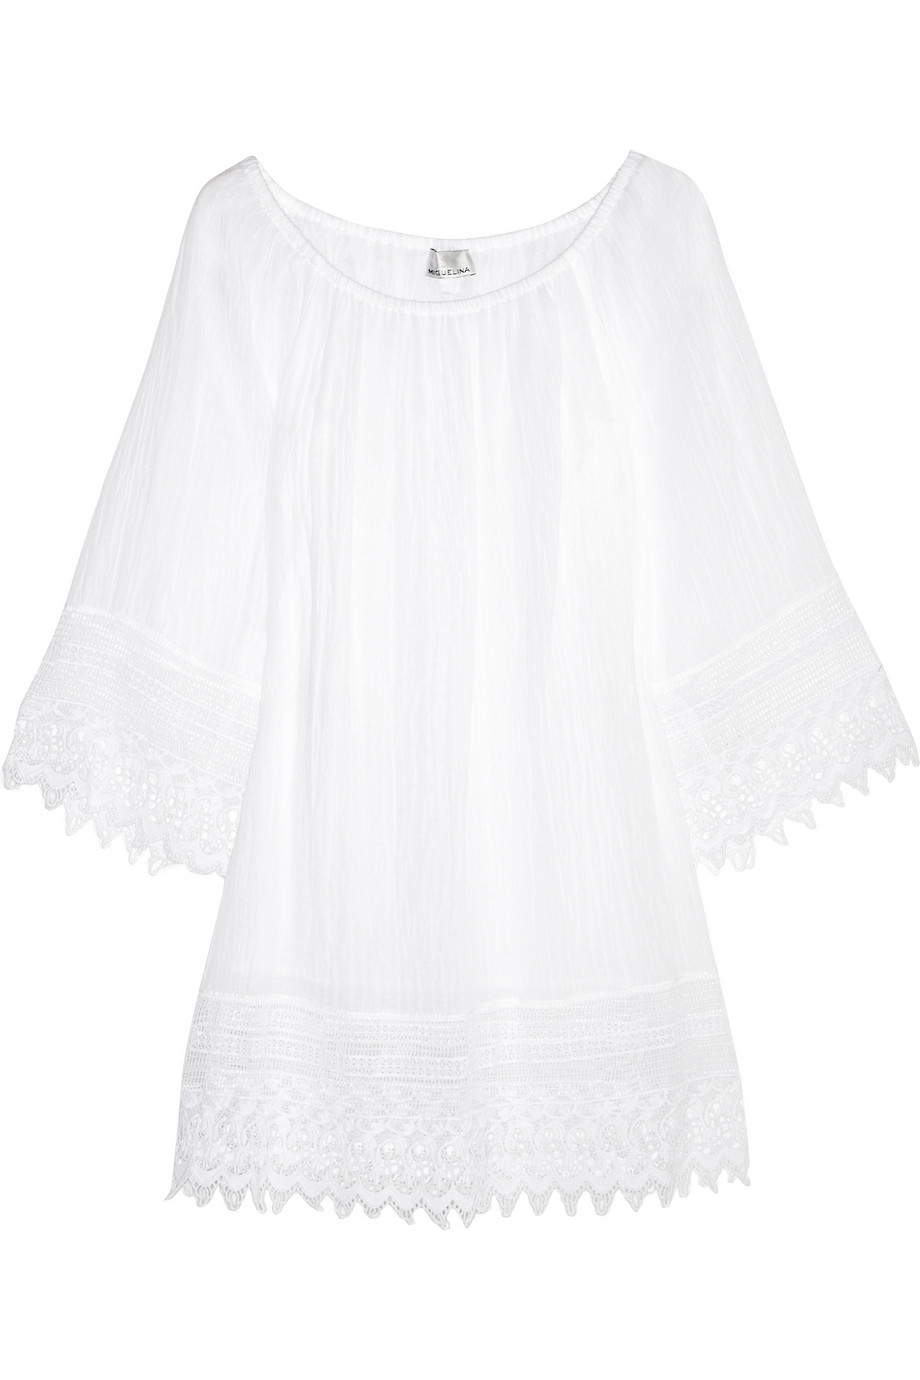 Lyst - Miguelina Lillian Crochet-Trimmed Cotton-Gauze Dress in White